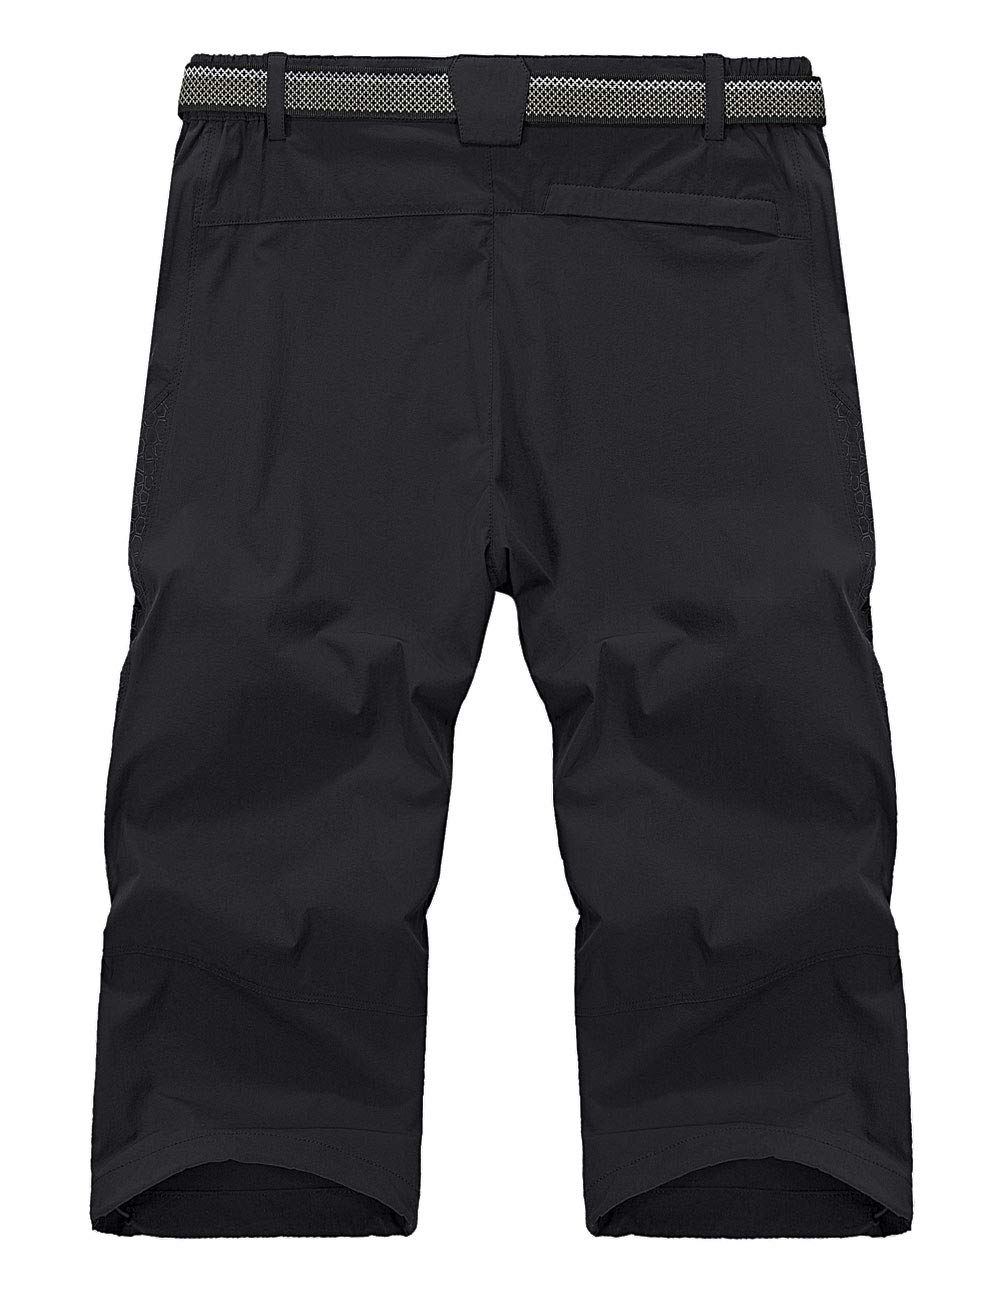 TACVASEN Men's Cargo 3/4 Long Shorts Quick Dry Below Knee Capri Slim FIit Pants Black, 34